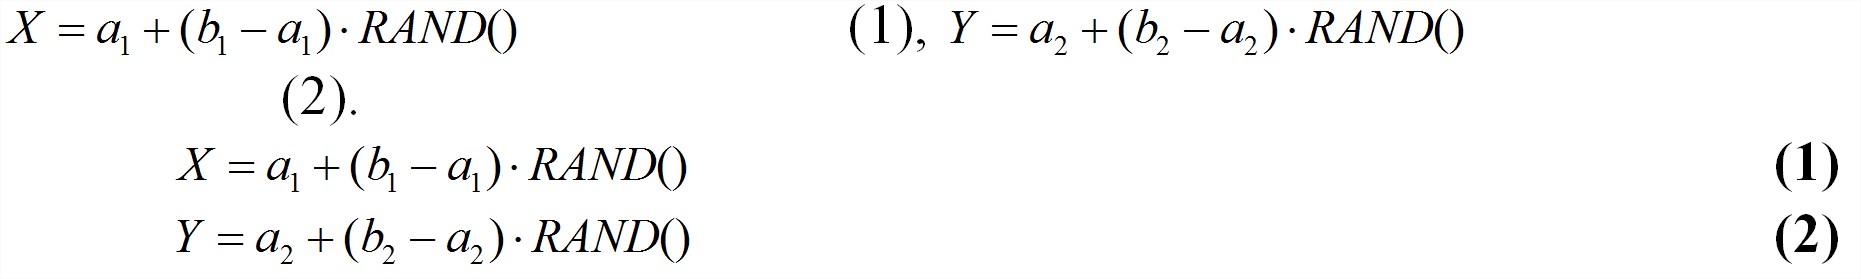 82-86 ТПБ 2009 формула